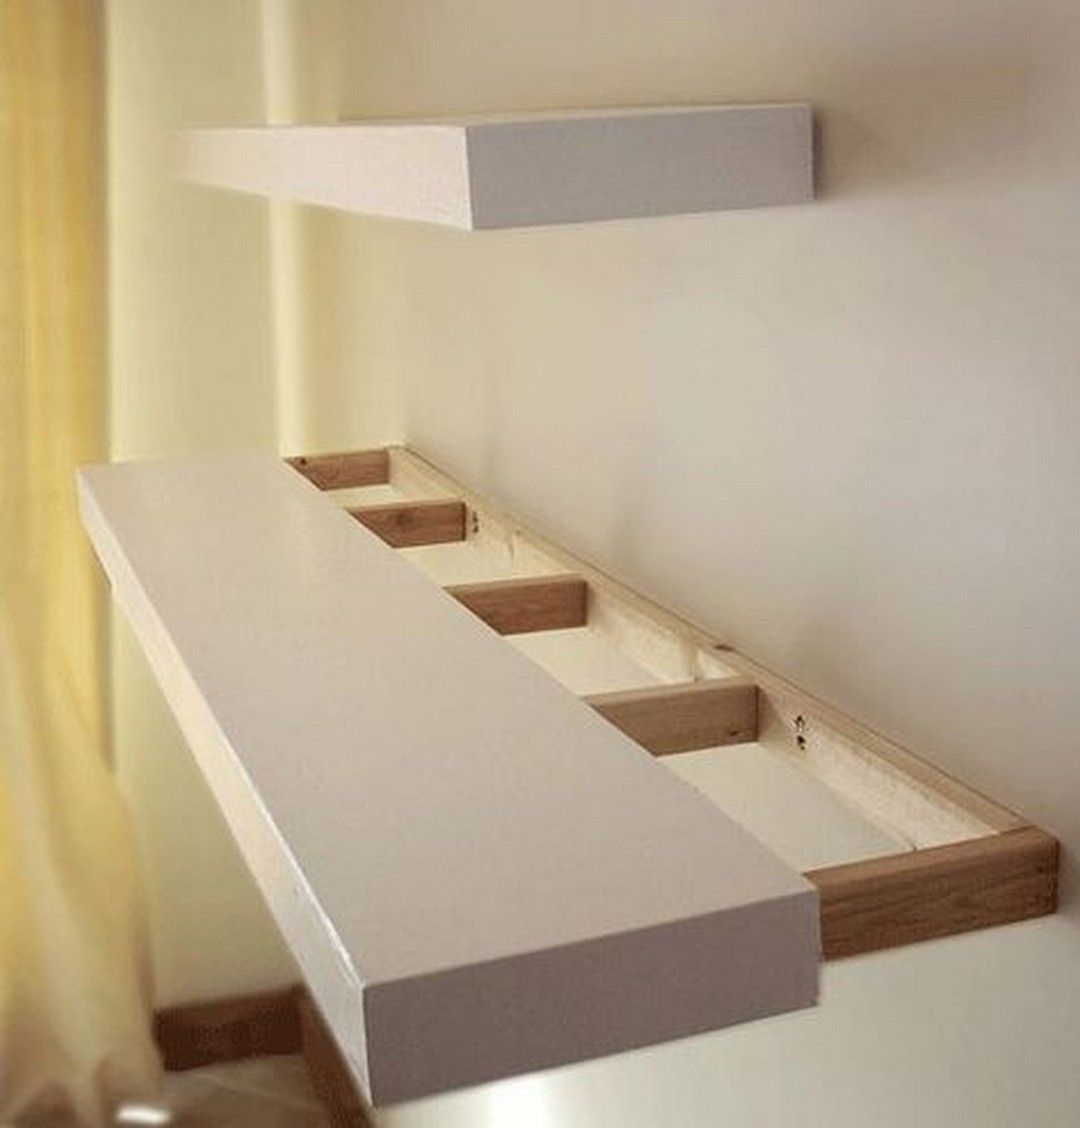 Wall mounted wood shelves